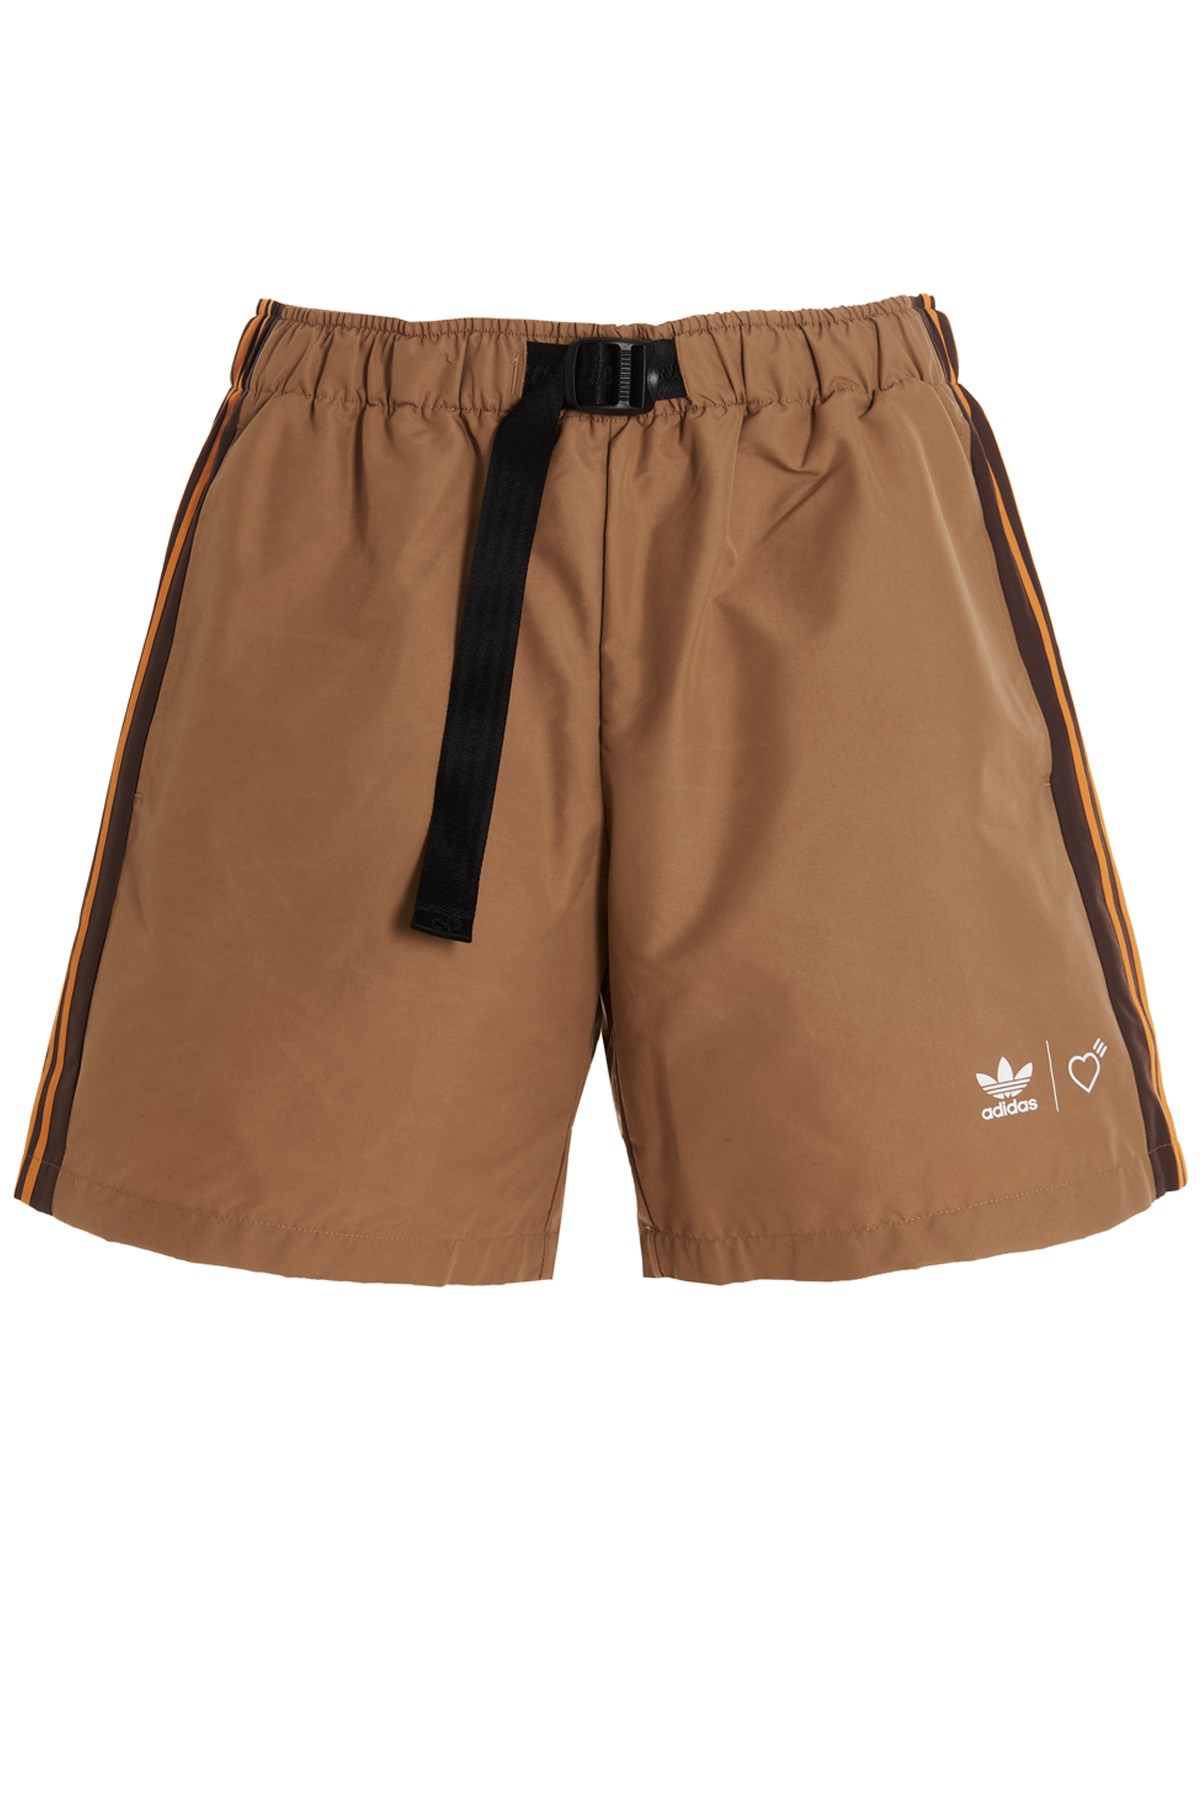 ADIDAS ORIGINALS Adidas Originals X Human Made ‘Windshorts Hm’ Shorts